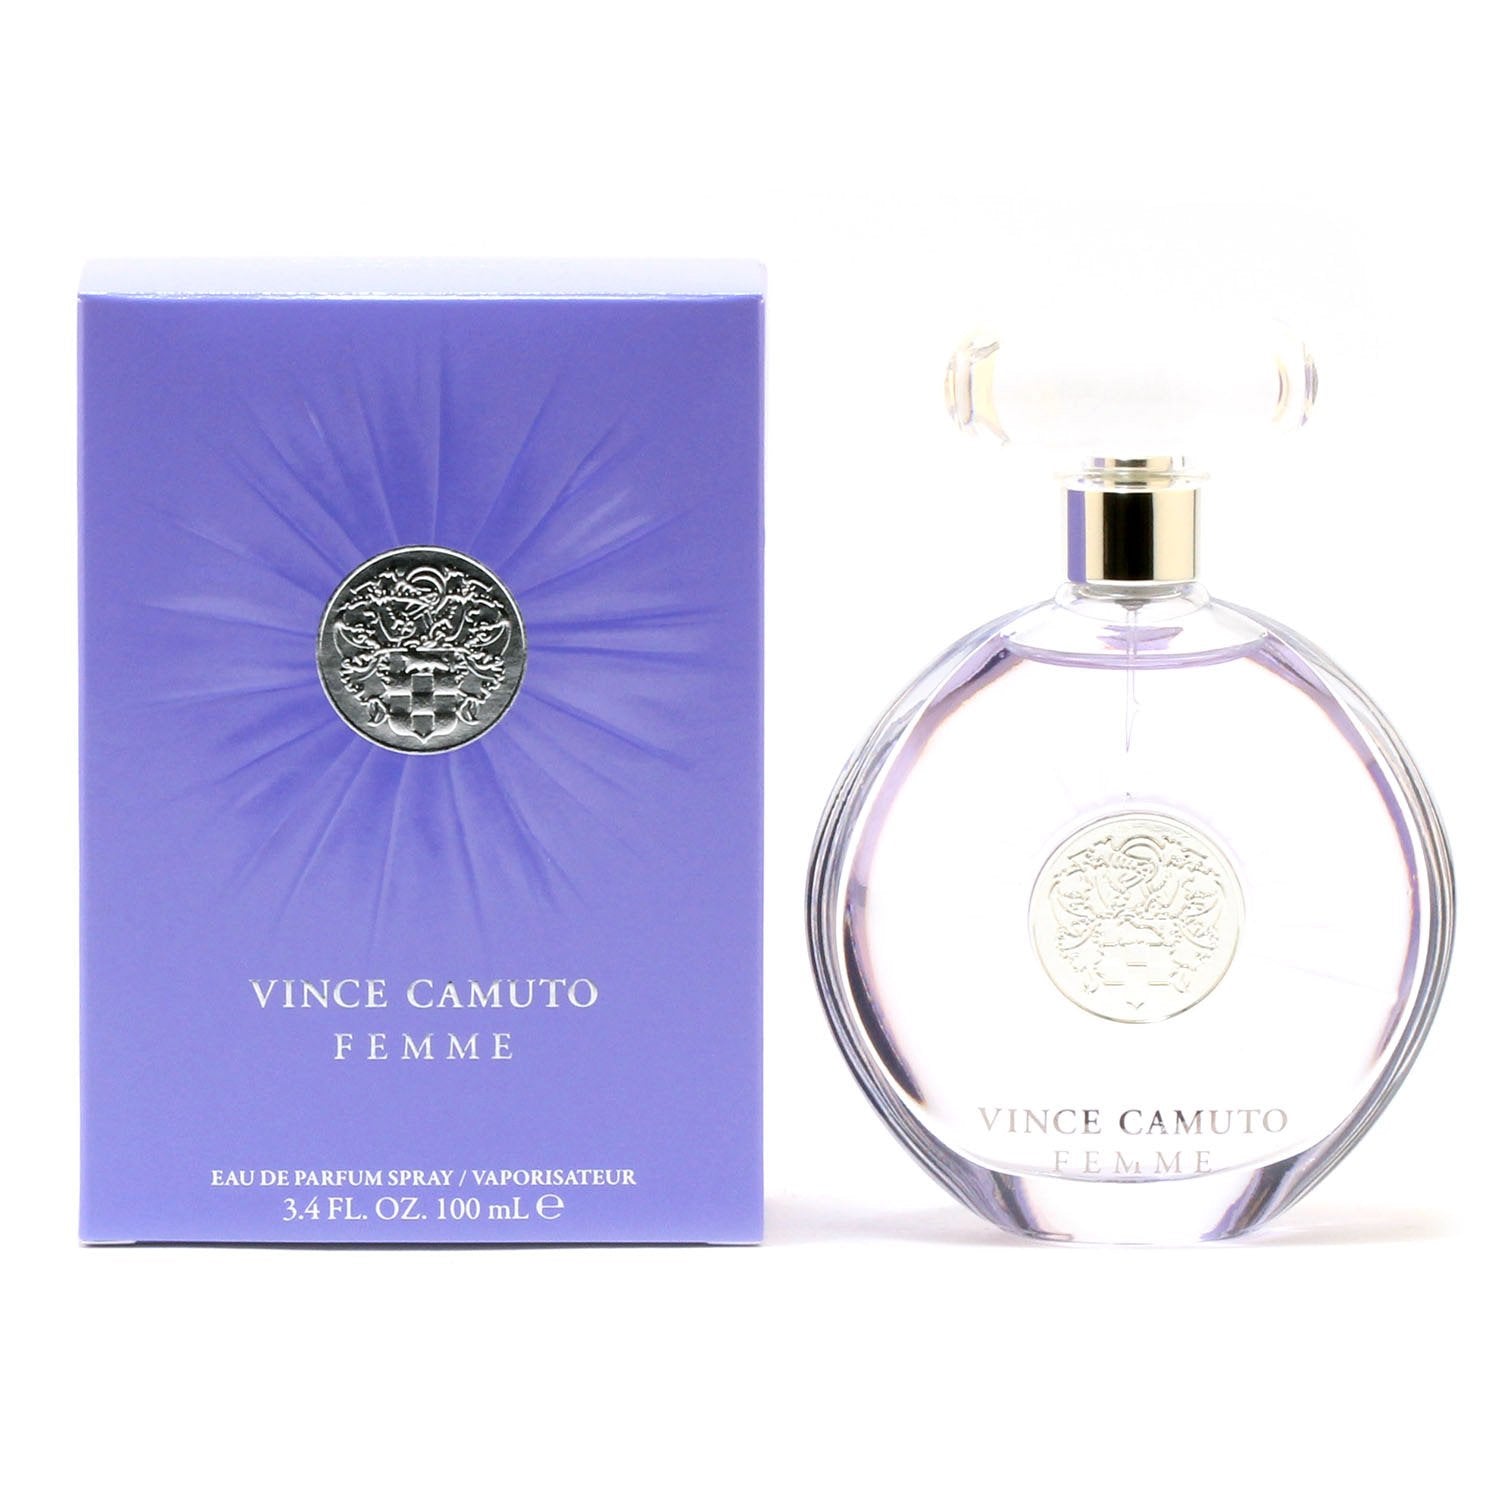 Perfume - VINCE CAMUTO FEMME - EAU DE PARFUM SPRAY, 3.4 OZ